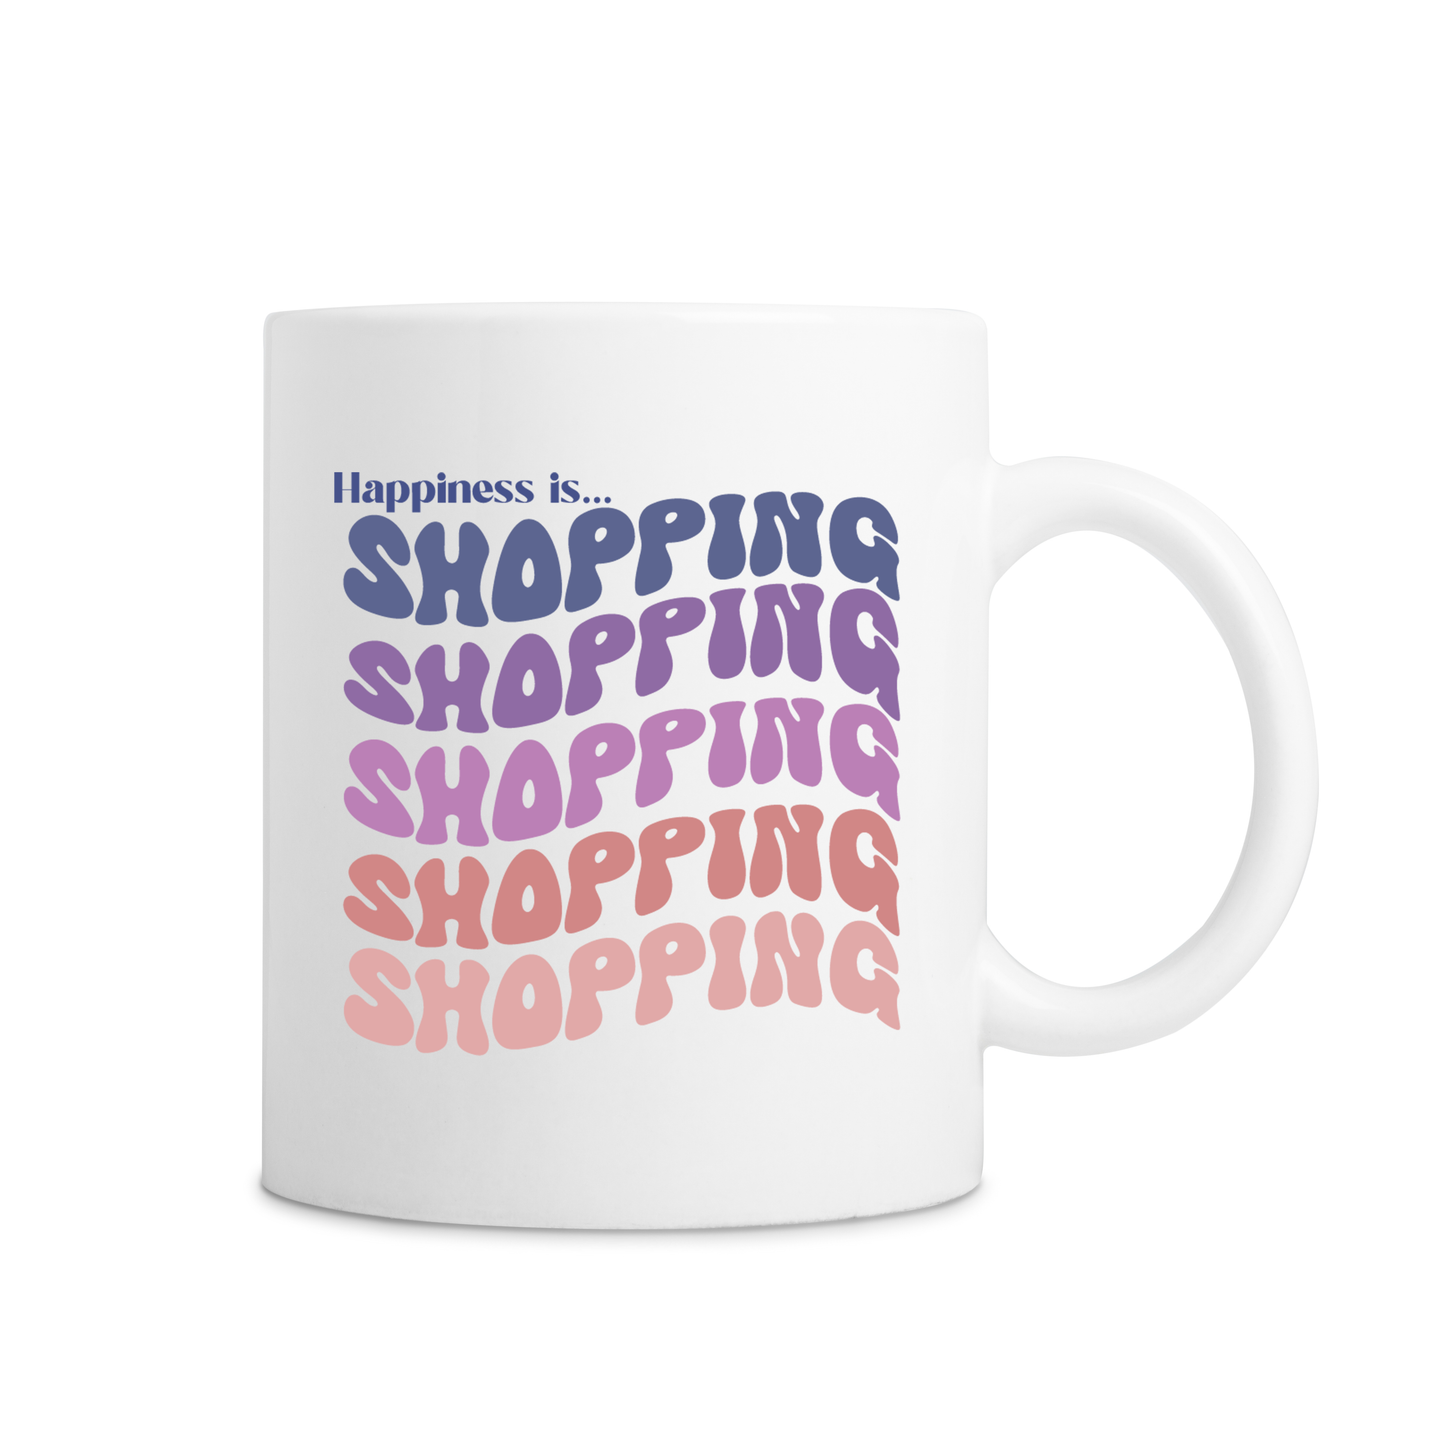 Happiness Is Shopping Mug - White